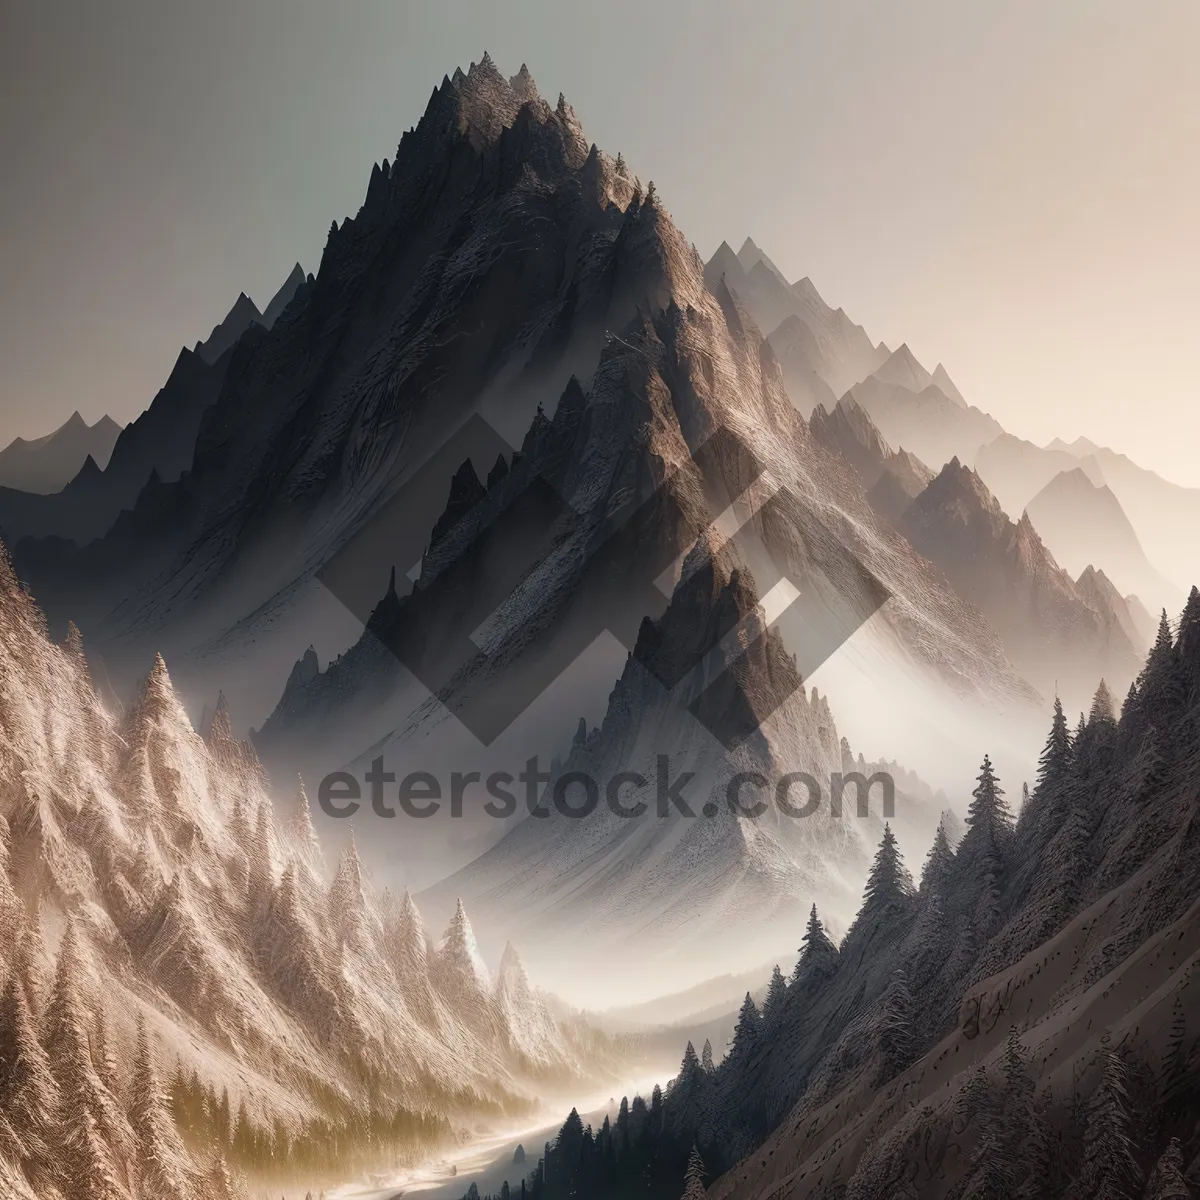 Picture of Snow-capped Range in Majestic Alpine Landscape.